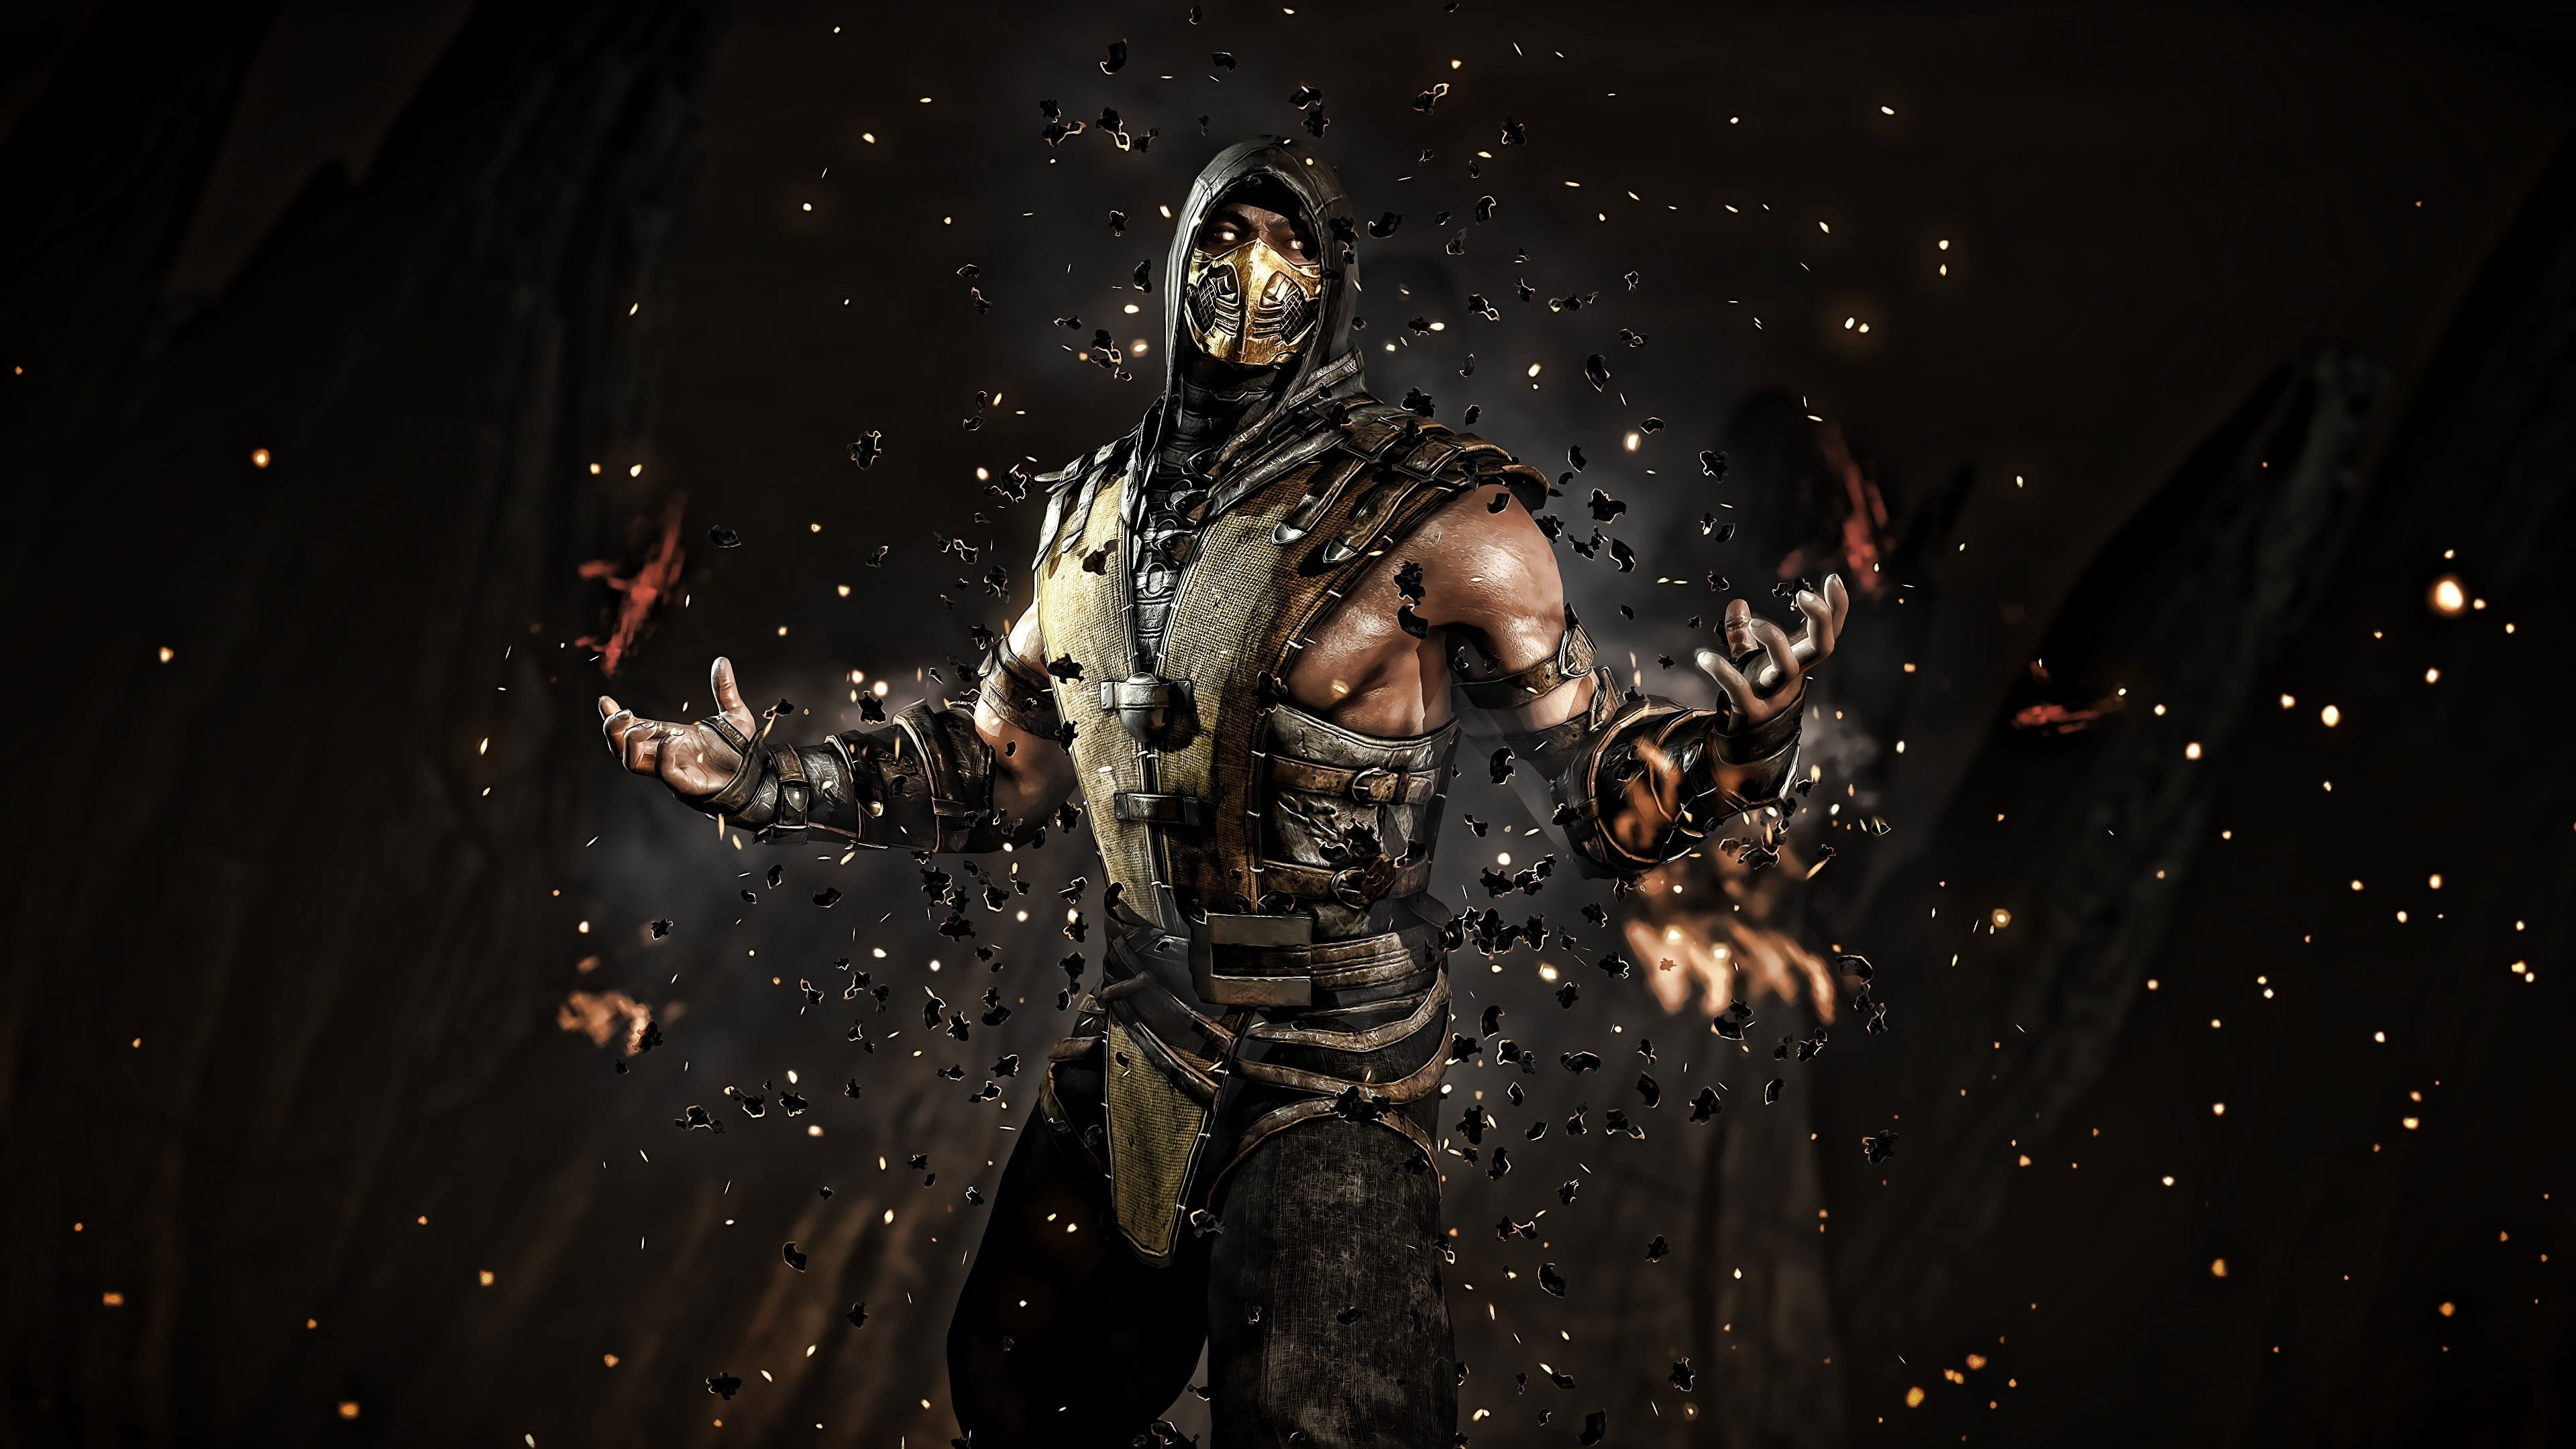 Wallpaper Mortal Kombat Scorpion, Video Games, Mortal Kombat, Game